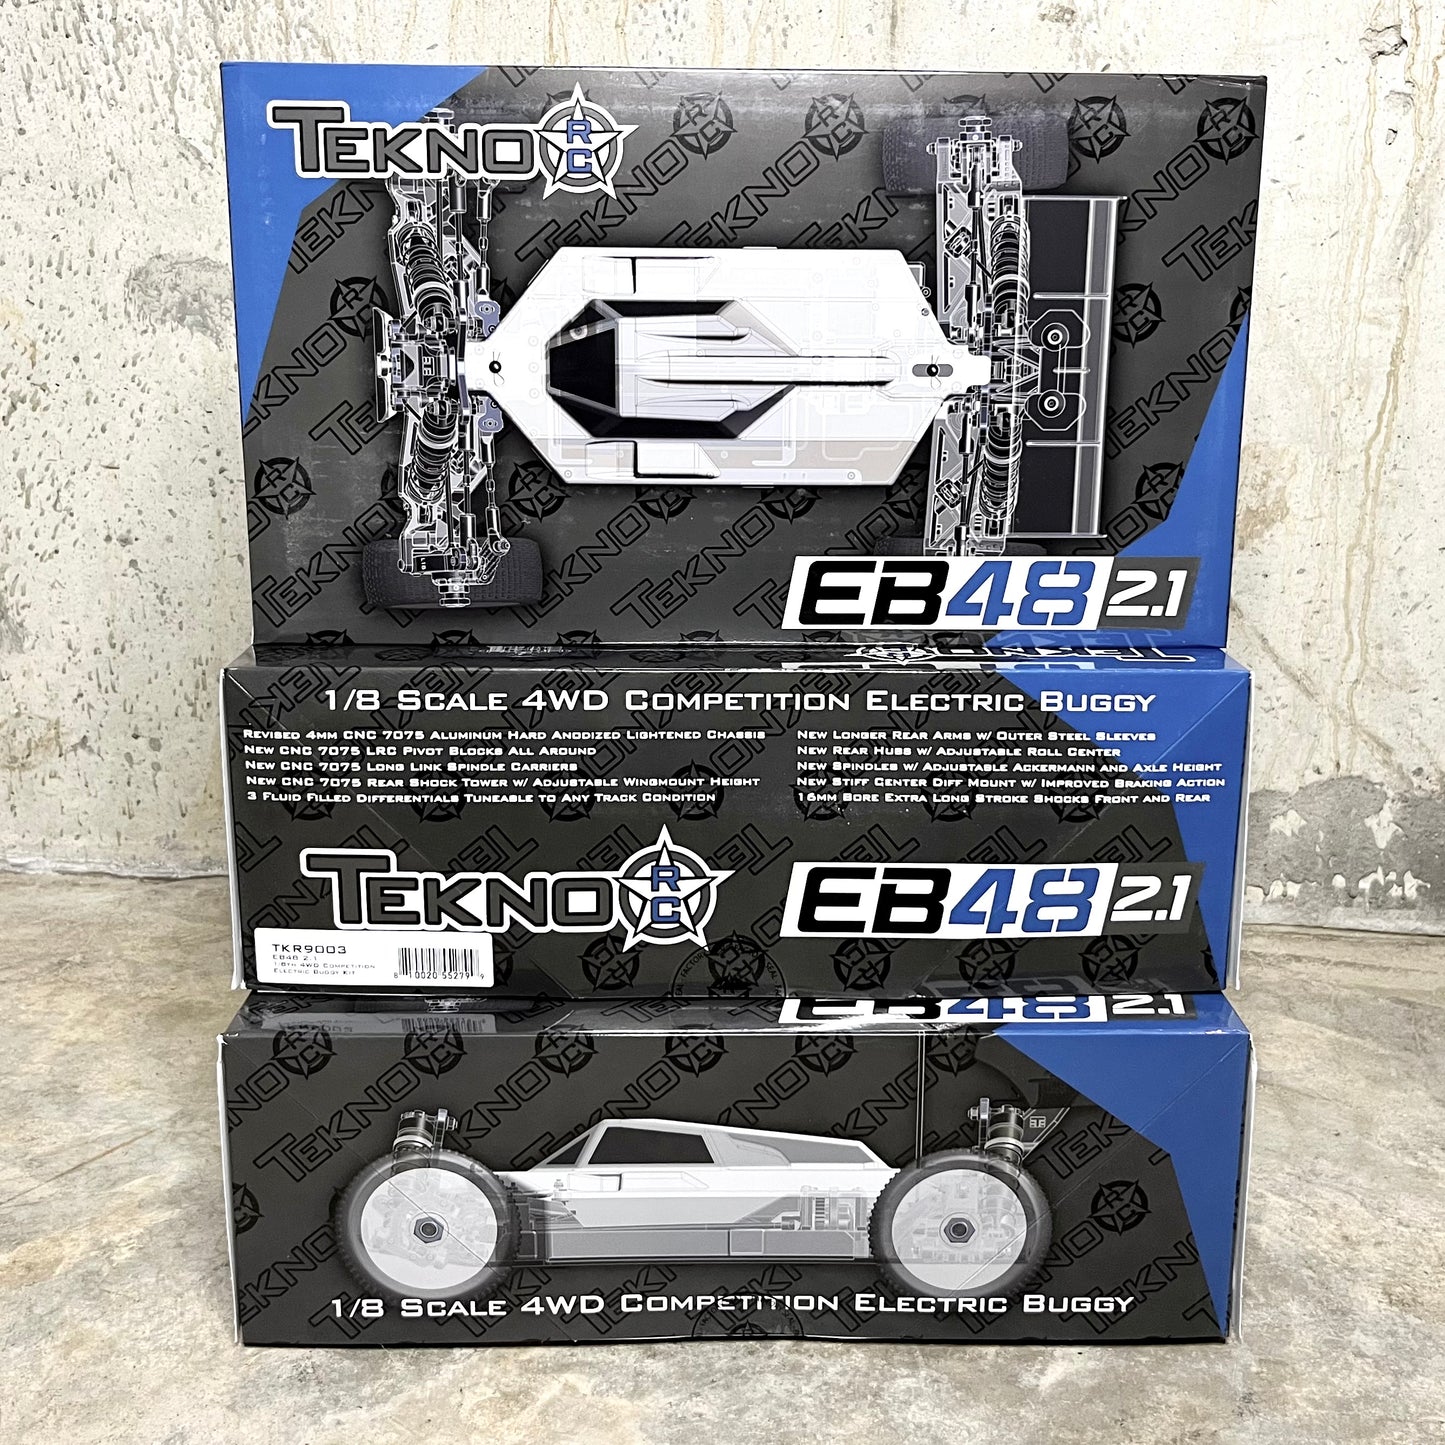 Tekno EB48 2.1